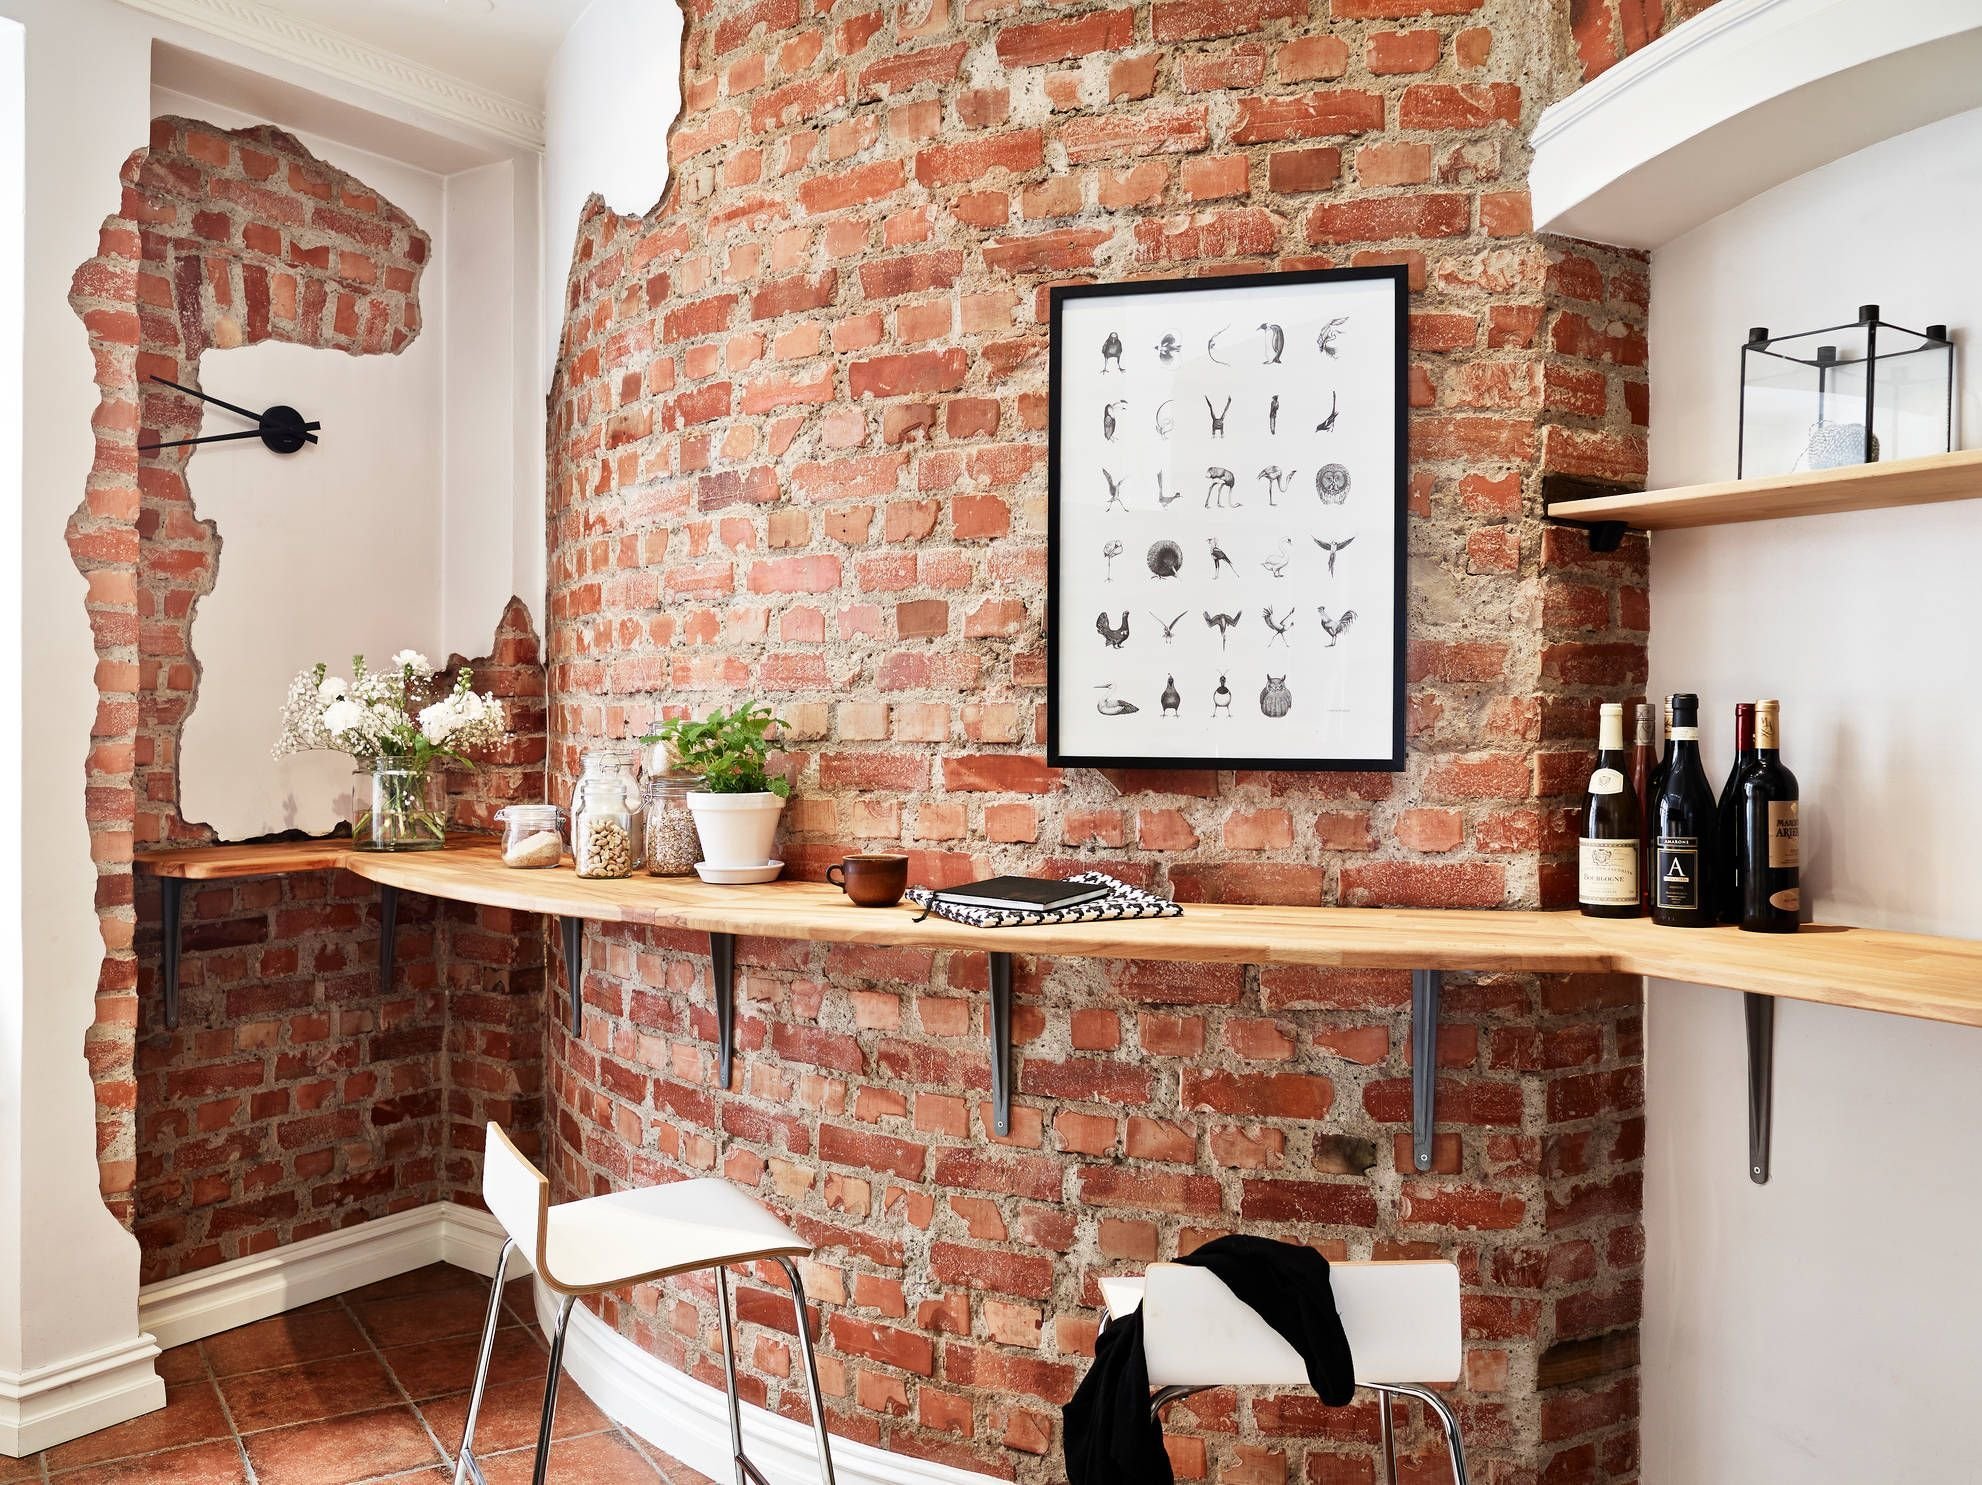 Brick kitchen interior: фотографии